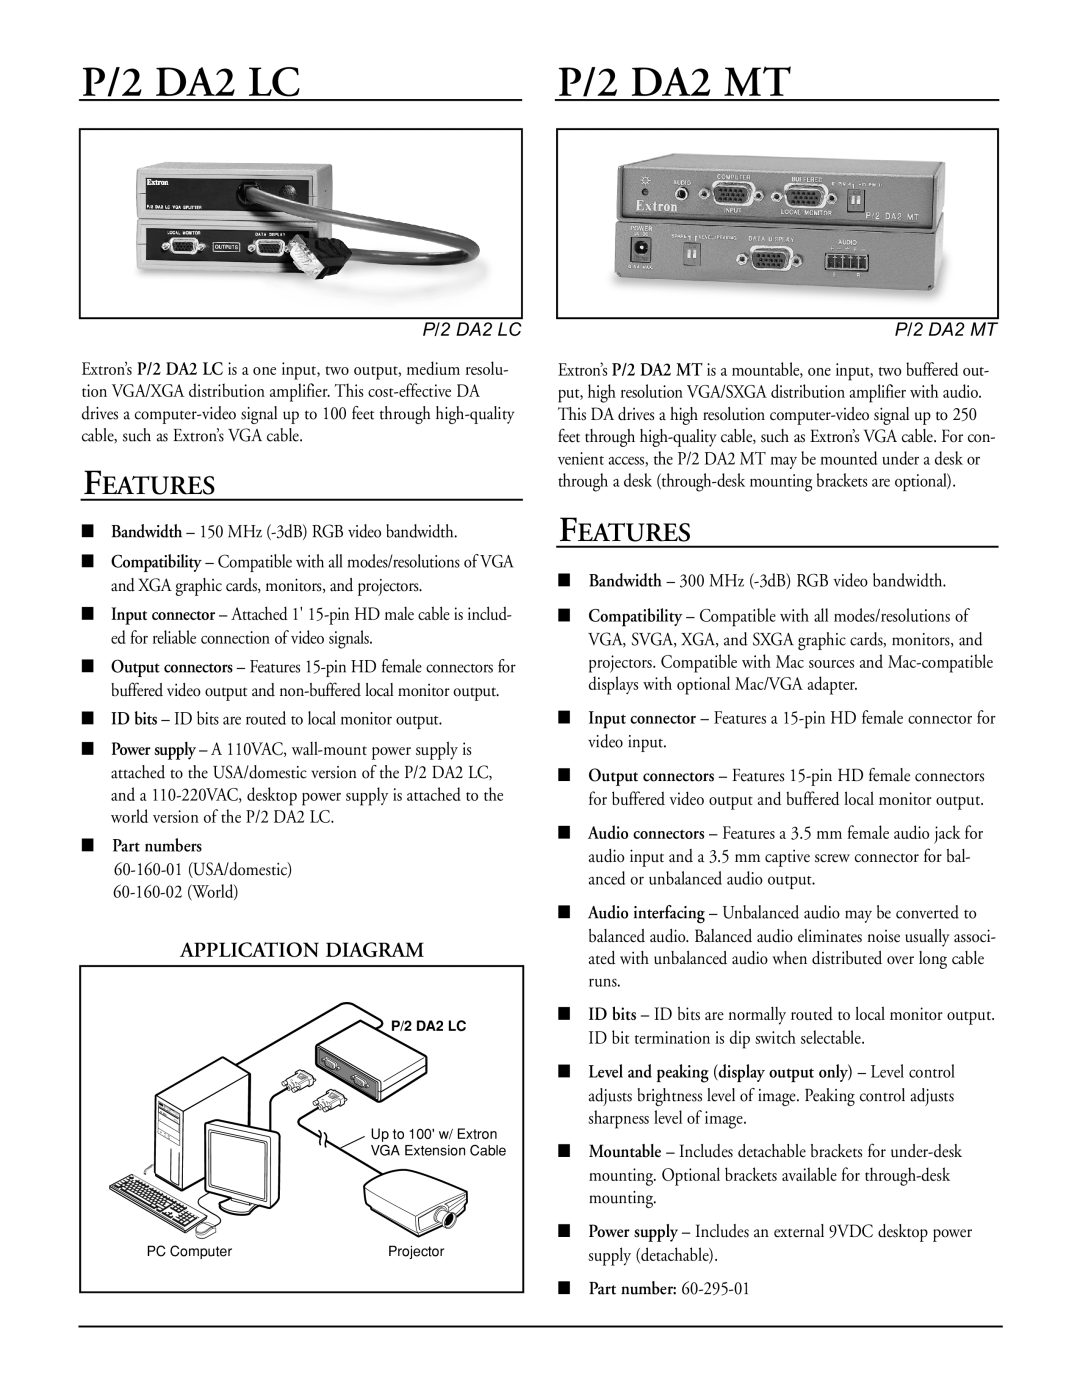 Extron electronic MAC manual P/2 DA2 LC, P/2 DA2 MT, Features, Application Diagram, Part numbers 